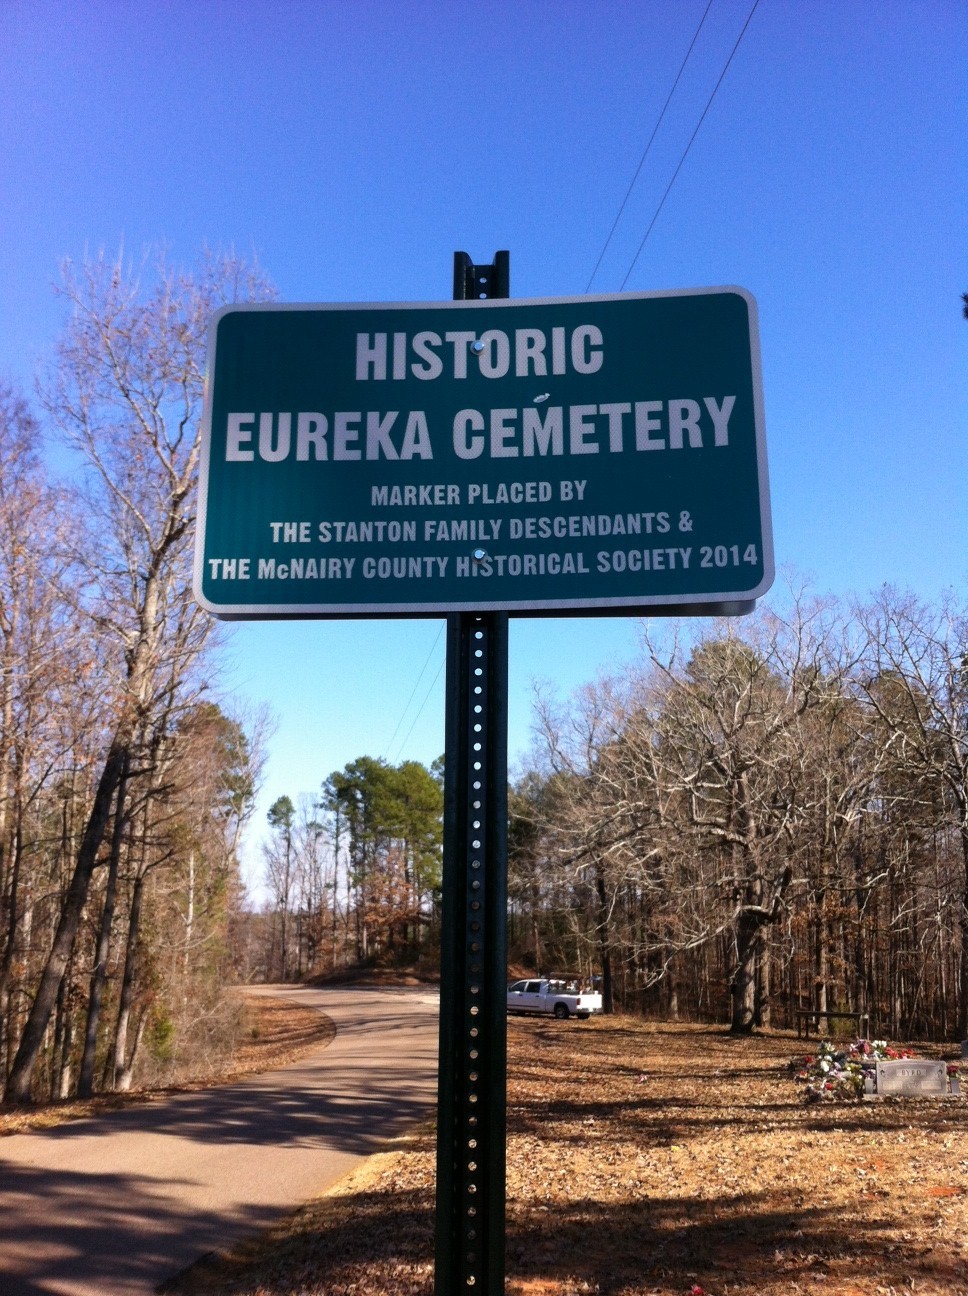 Eureka Cemetery